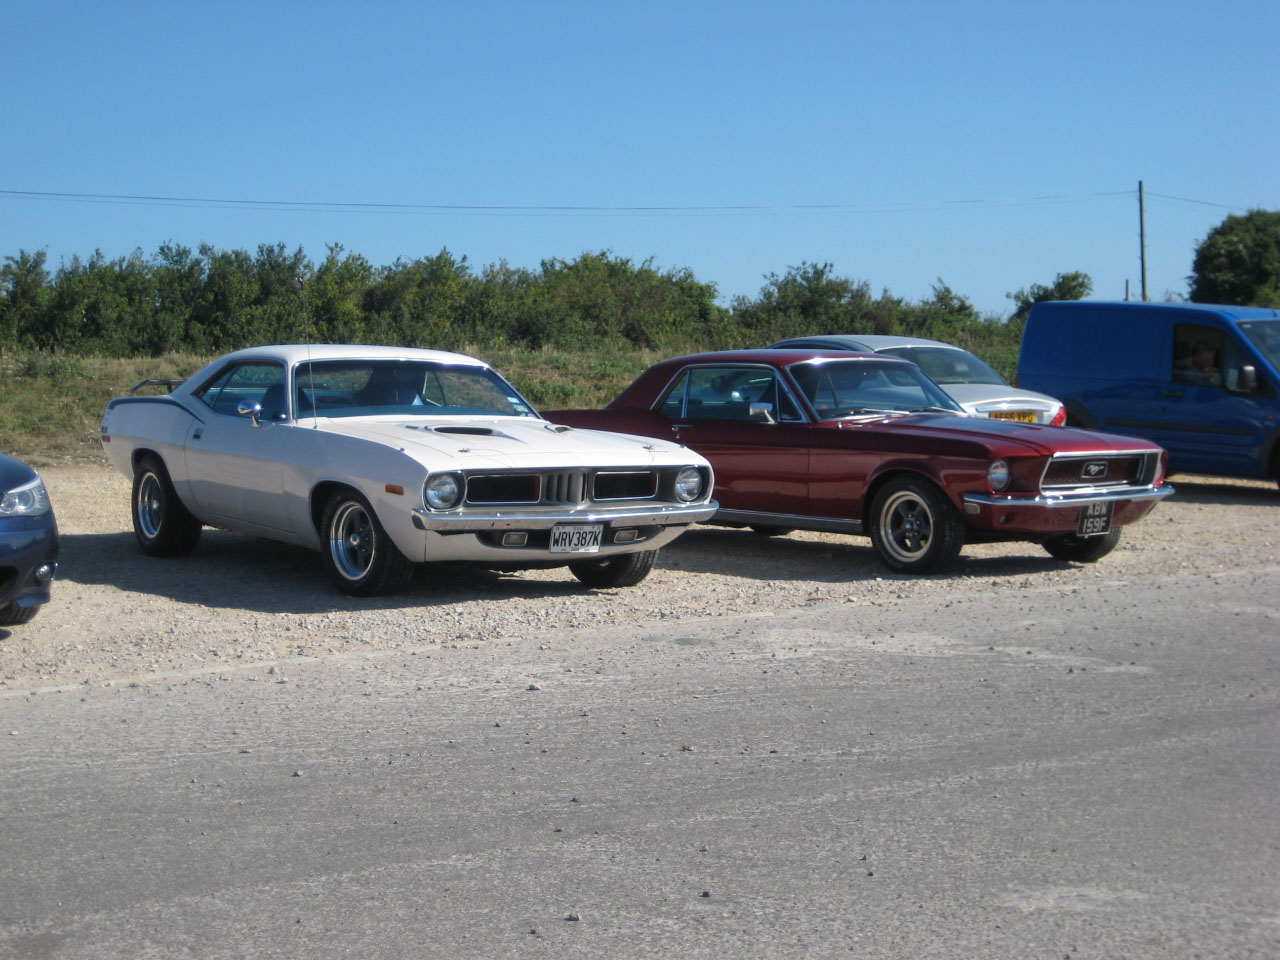 Mustang and Barracuda